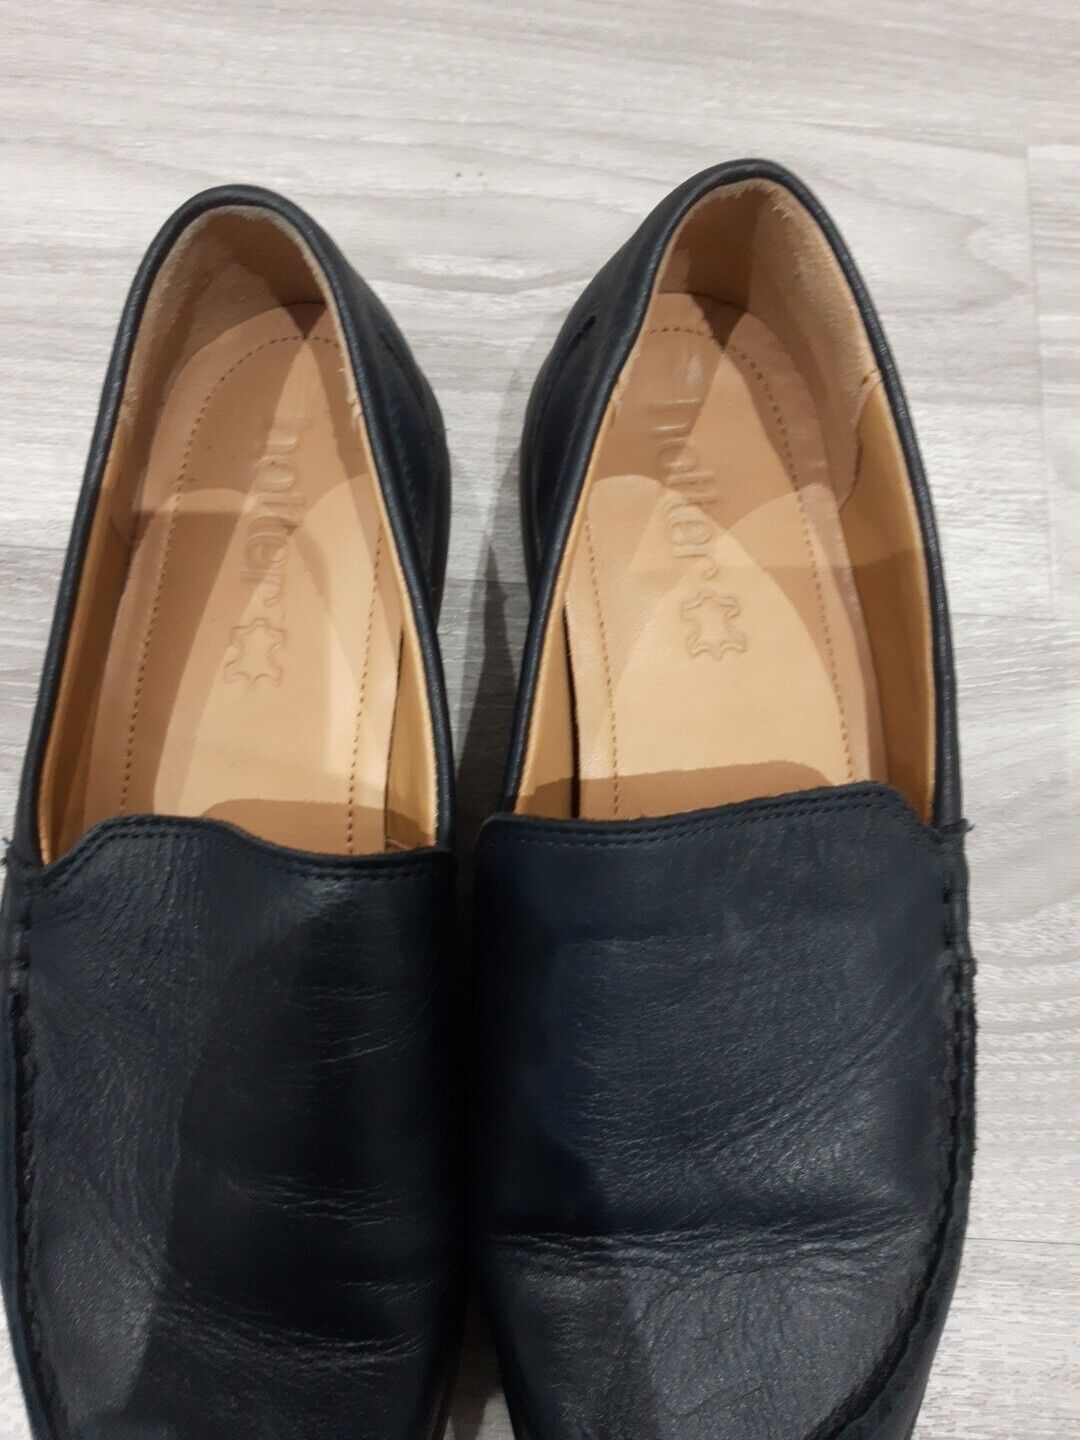 New Hotter Shoes Size 7 EXF Navy Blue | eBay